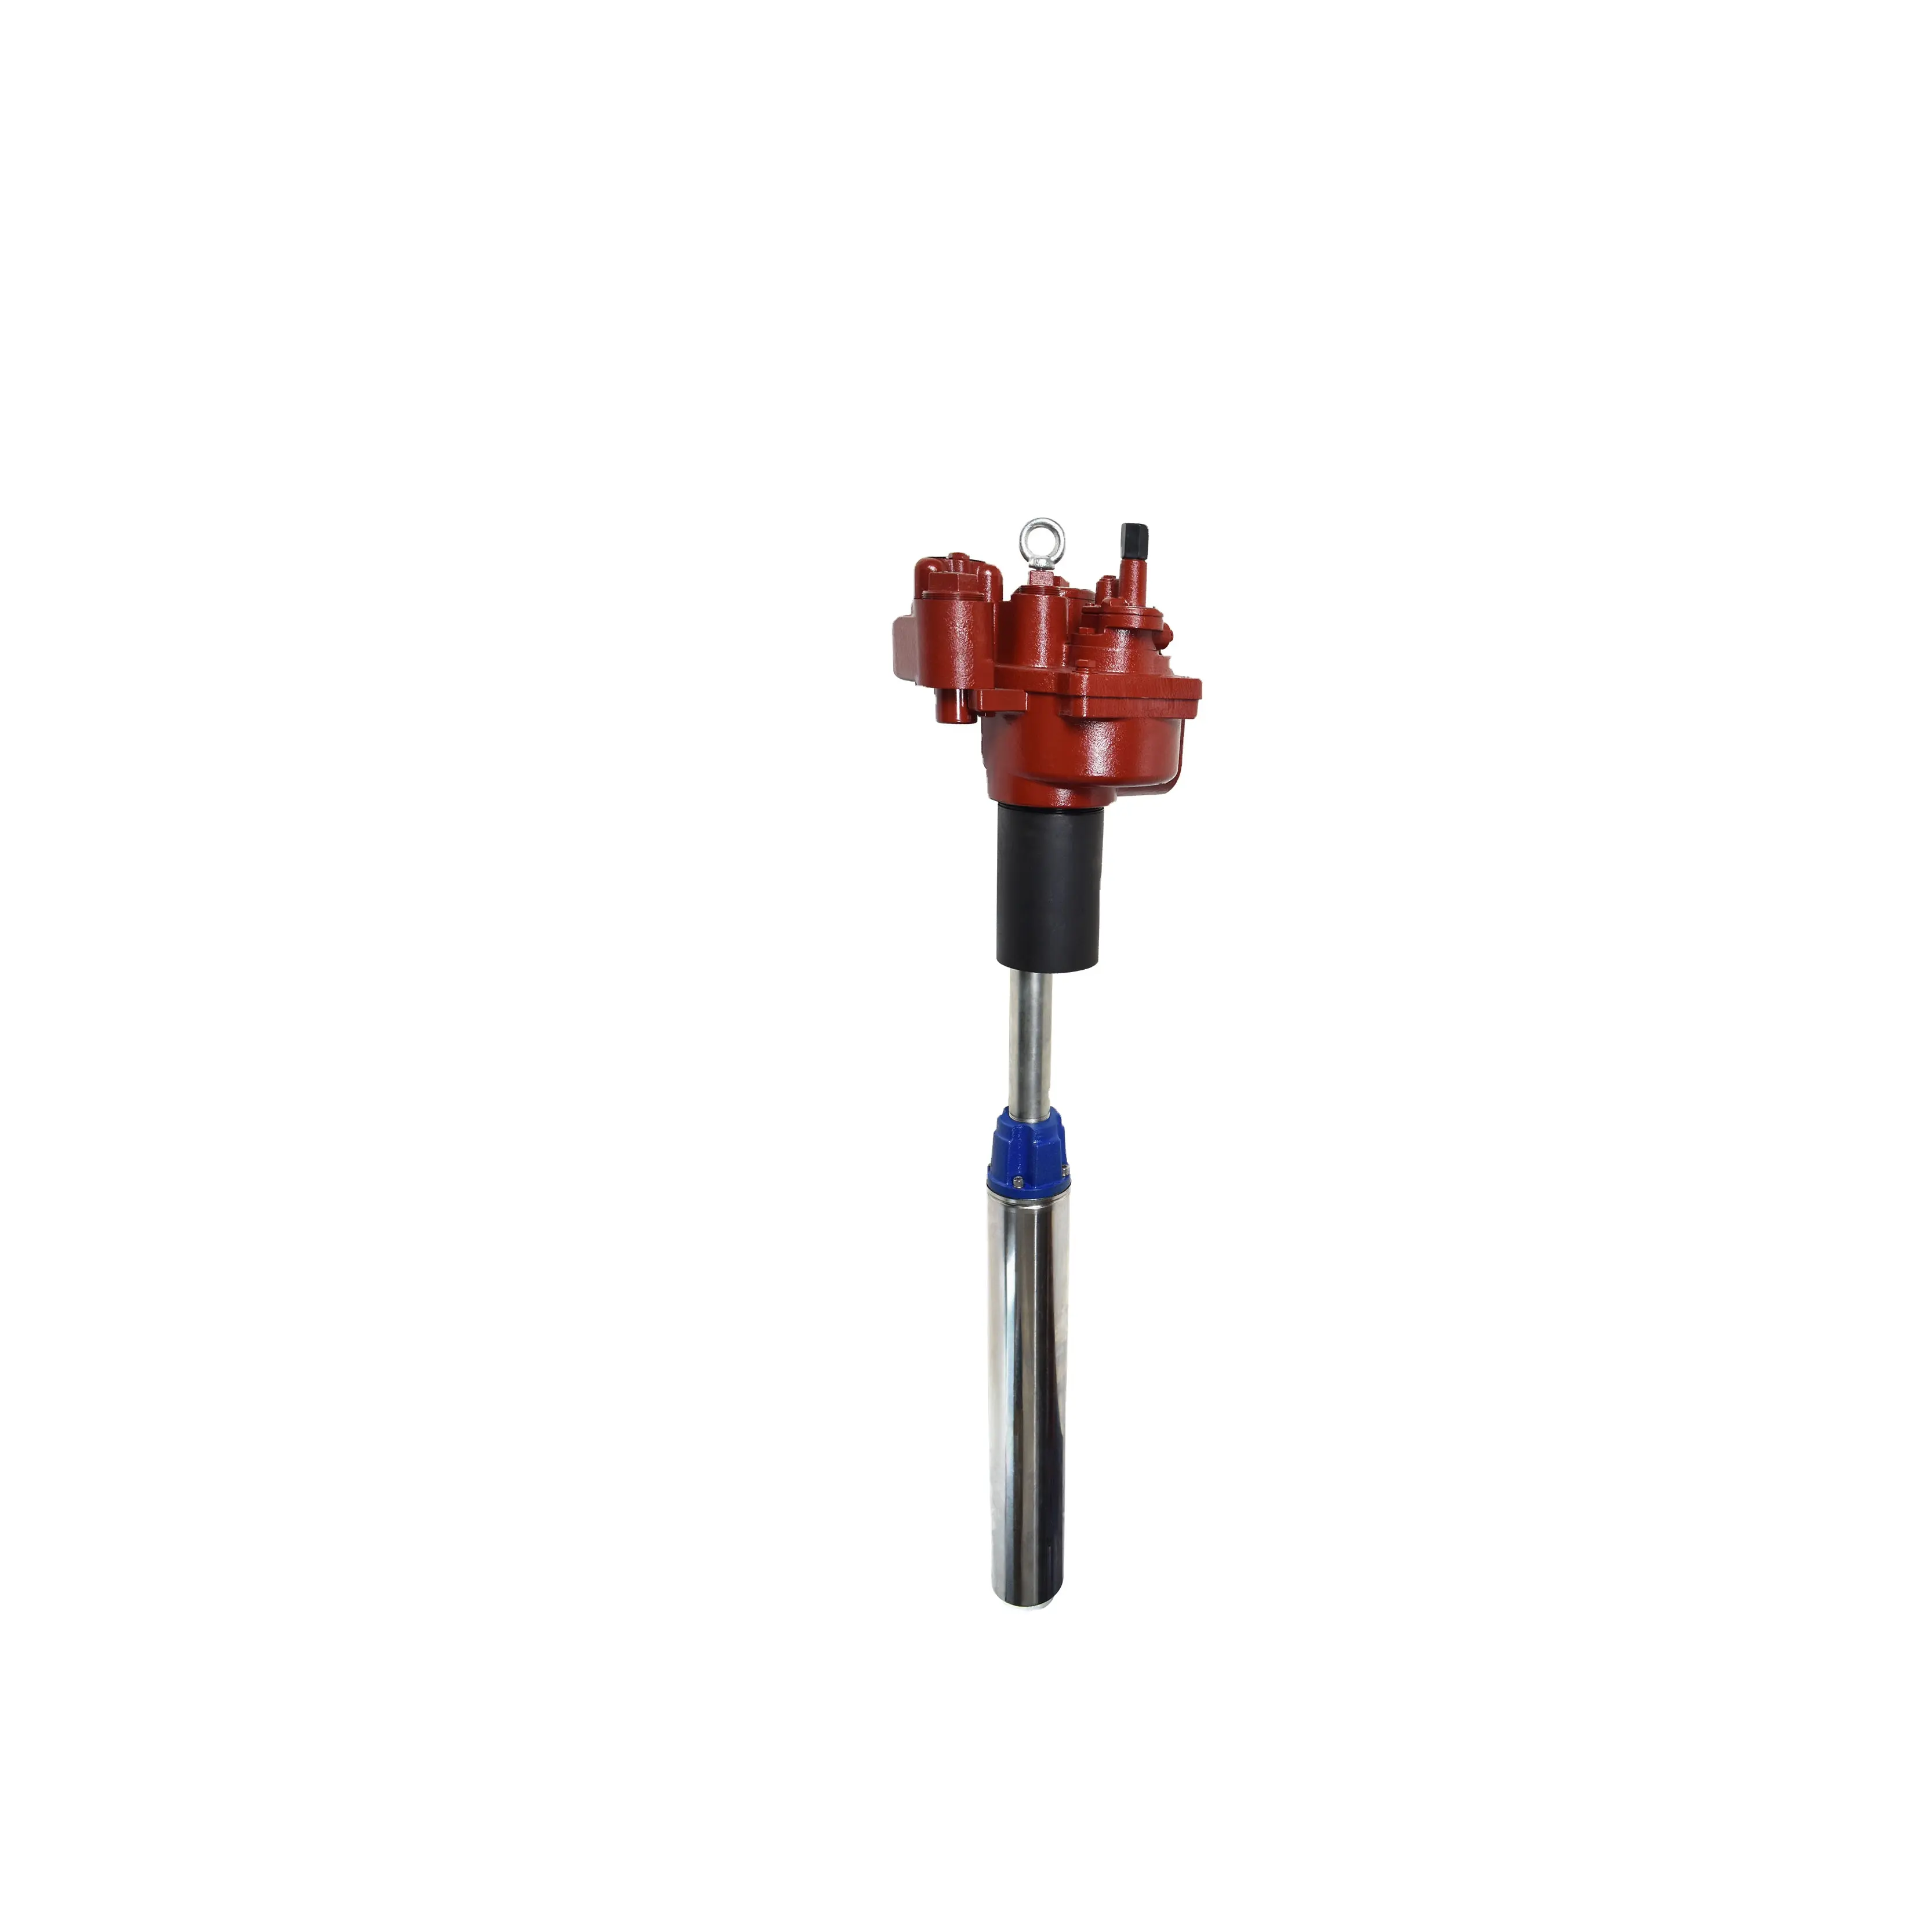 0.75hp/1.5hp/2.0hp jaket merah Atex bersertifikat kualitas tinggi minyak listrik lengkap STP Series bahan bakar pompa turbin Submersible